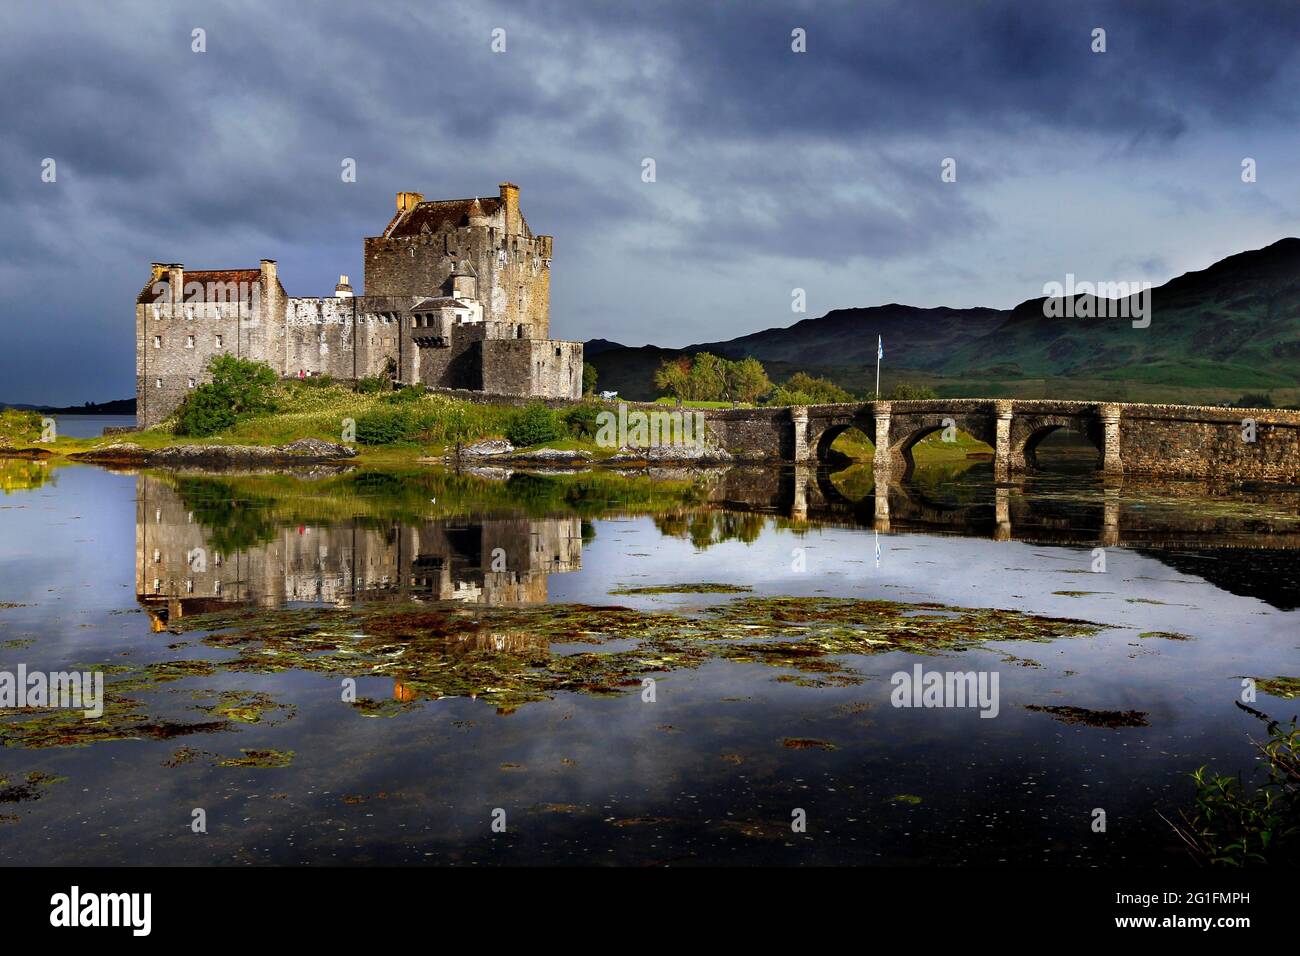 Loch, Eilean Donan Castle, castle, headland, tidal island, stone footbridge, ancestral seat Clan Macrae, Loch Duich, Dornie, Highlands, Highlands Stock Photo